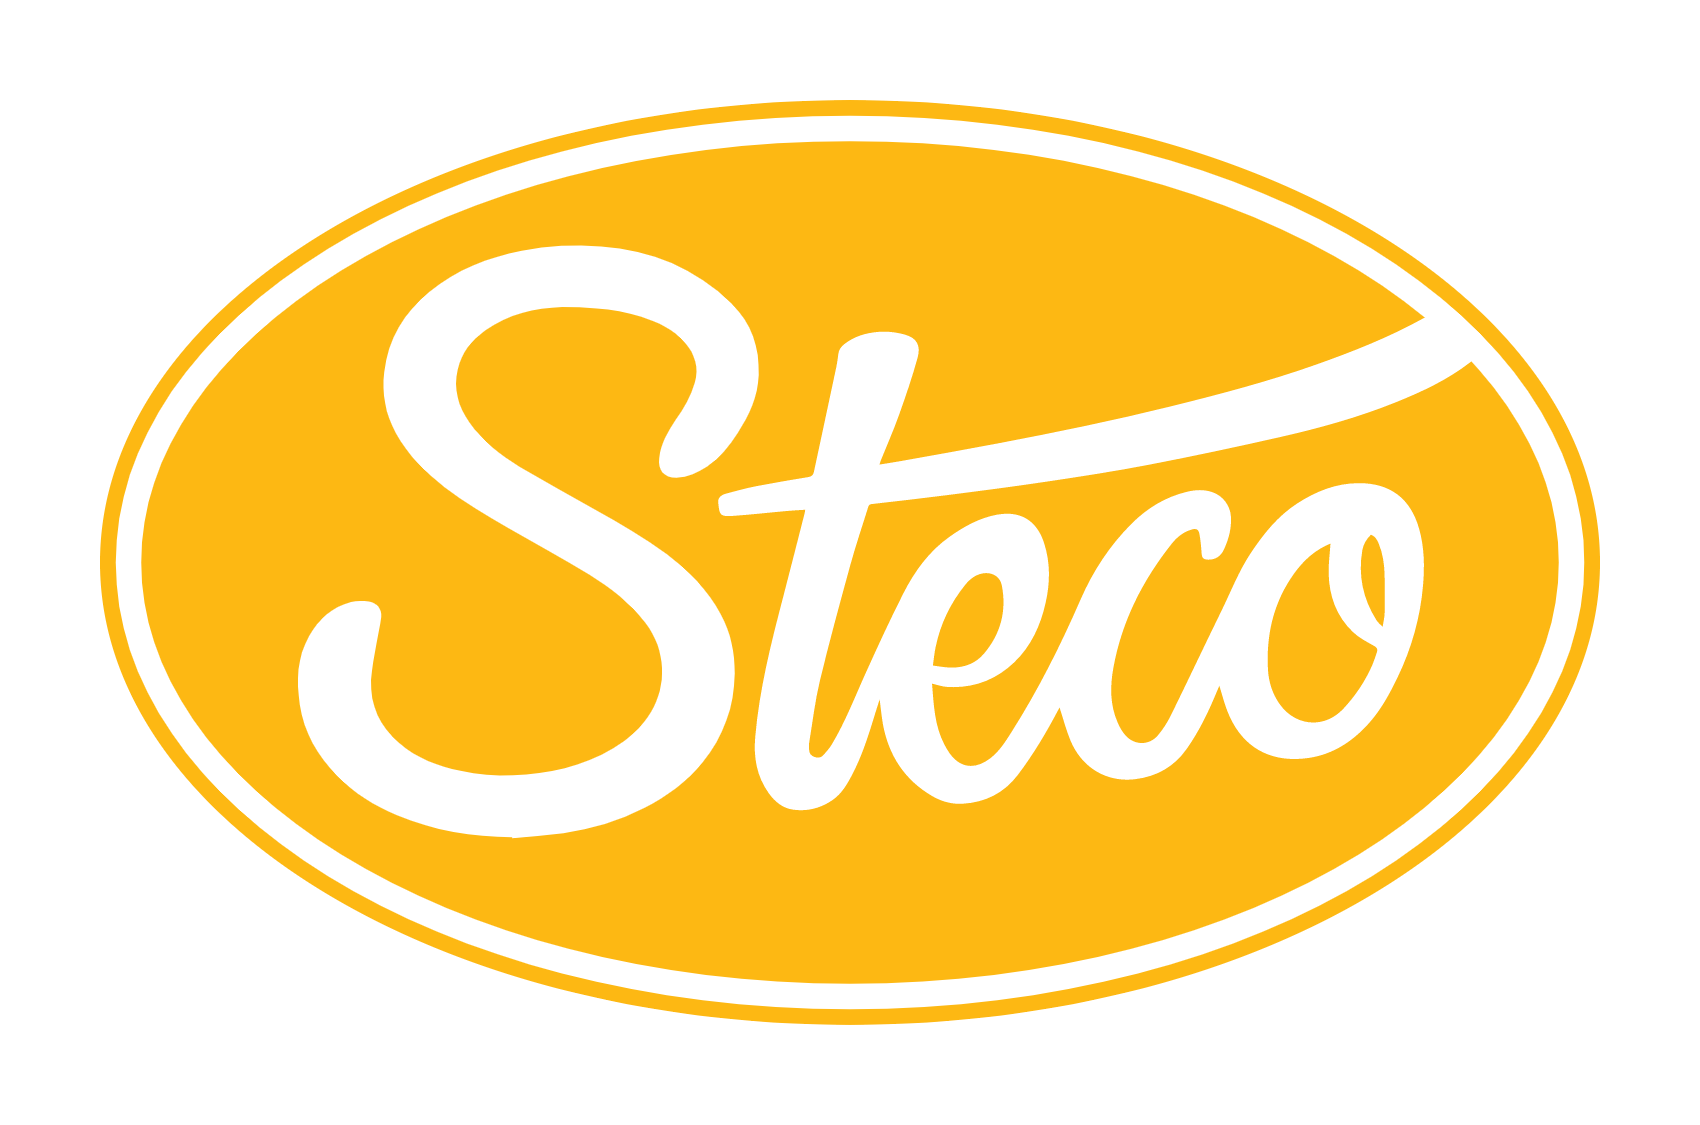 Steco - Olona